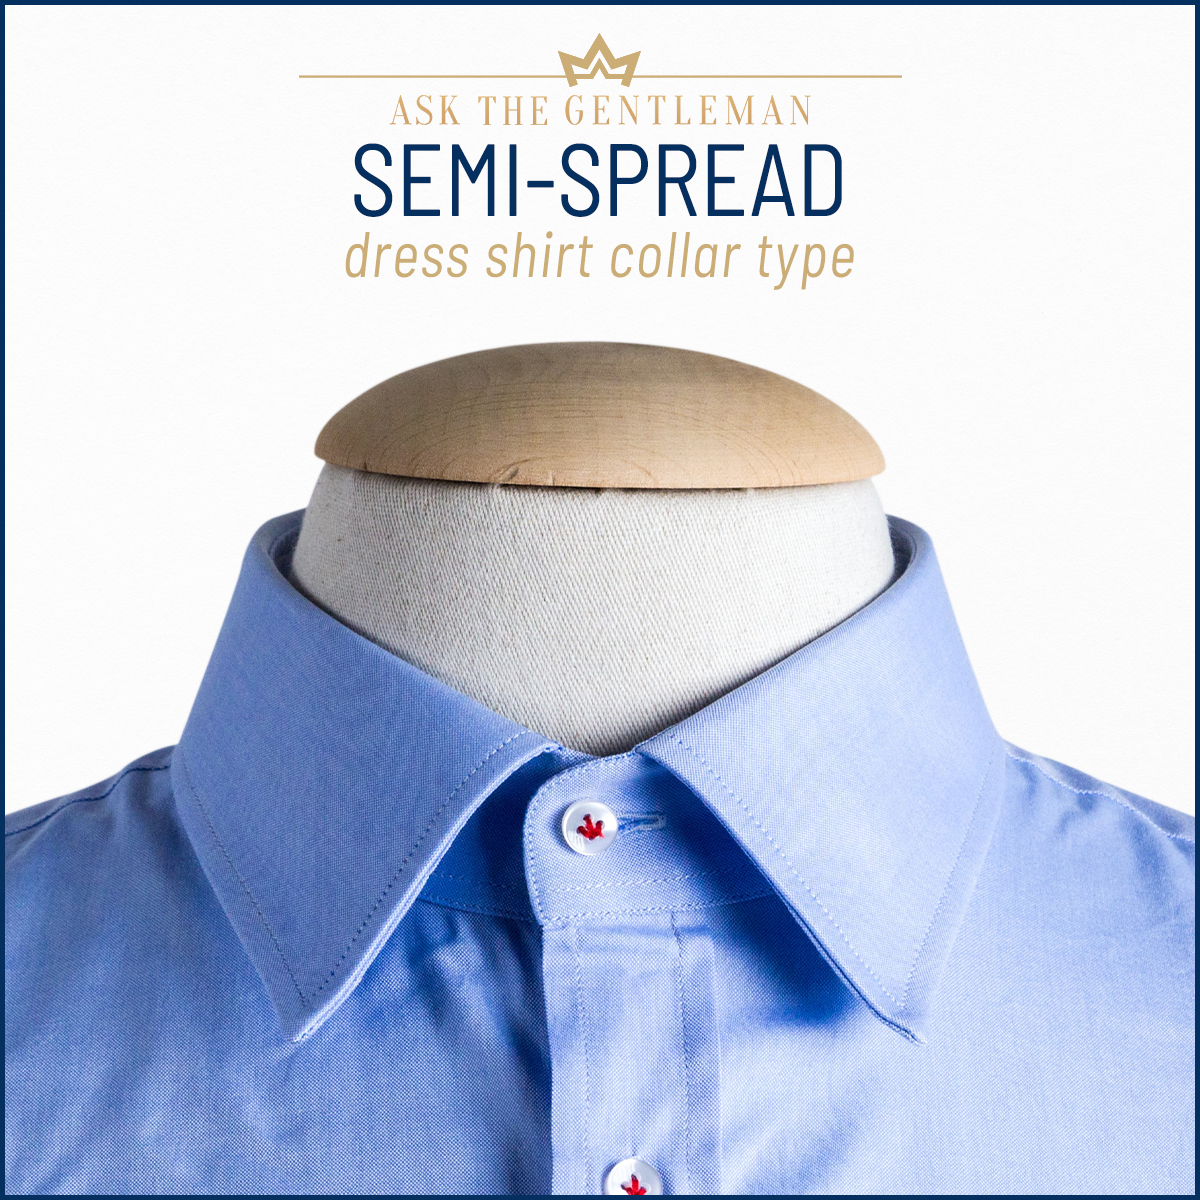 Semi-spread dress shirt collar type